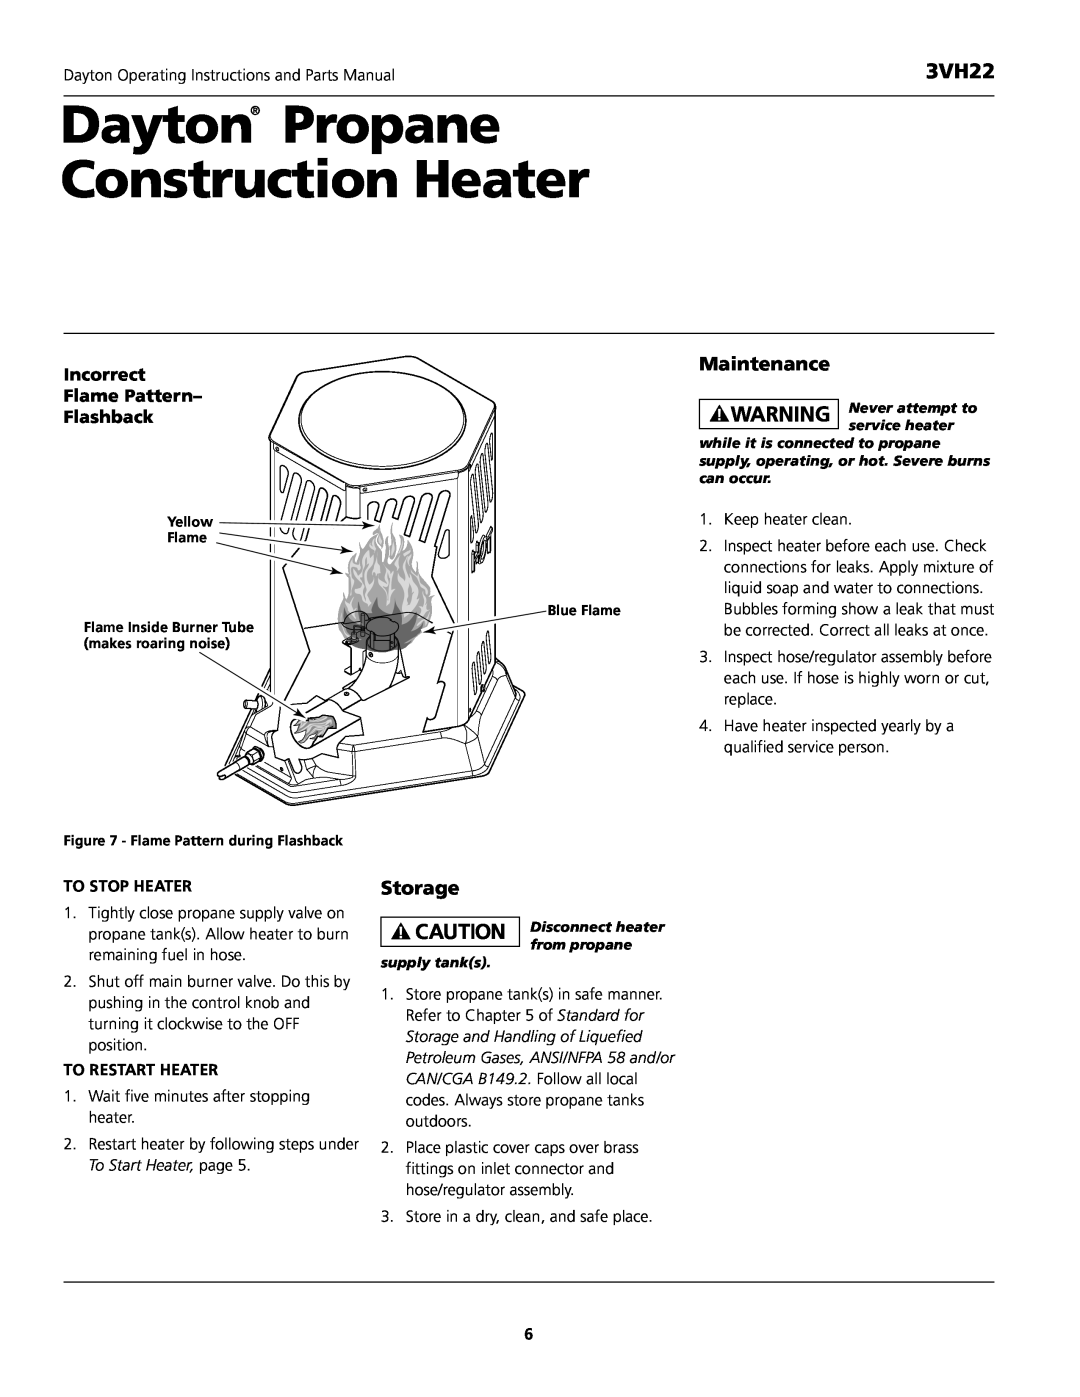 Dayton 3VH22 Dayton Propane Construction Heater, Maintenance, Storage, Incorrect Flame Pattern- Flashback, To Stop Heater 